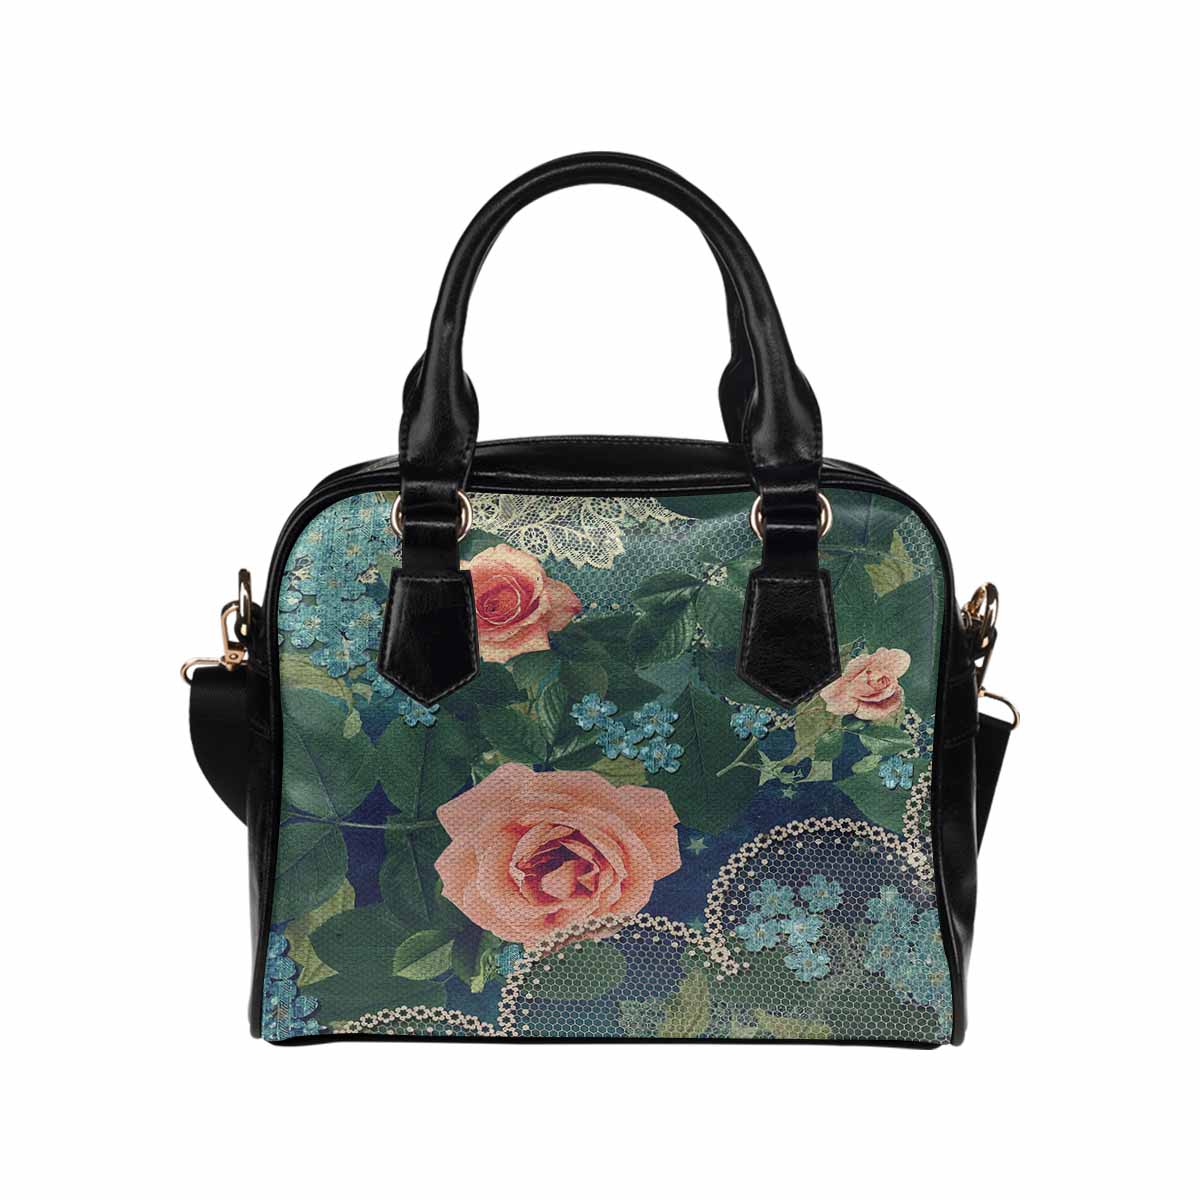 Victorian lace print, cute handbag, Mod 19163453, design 01